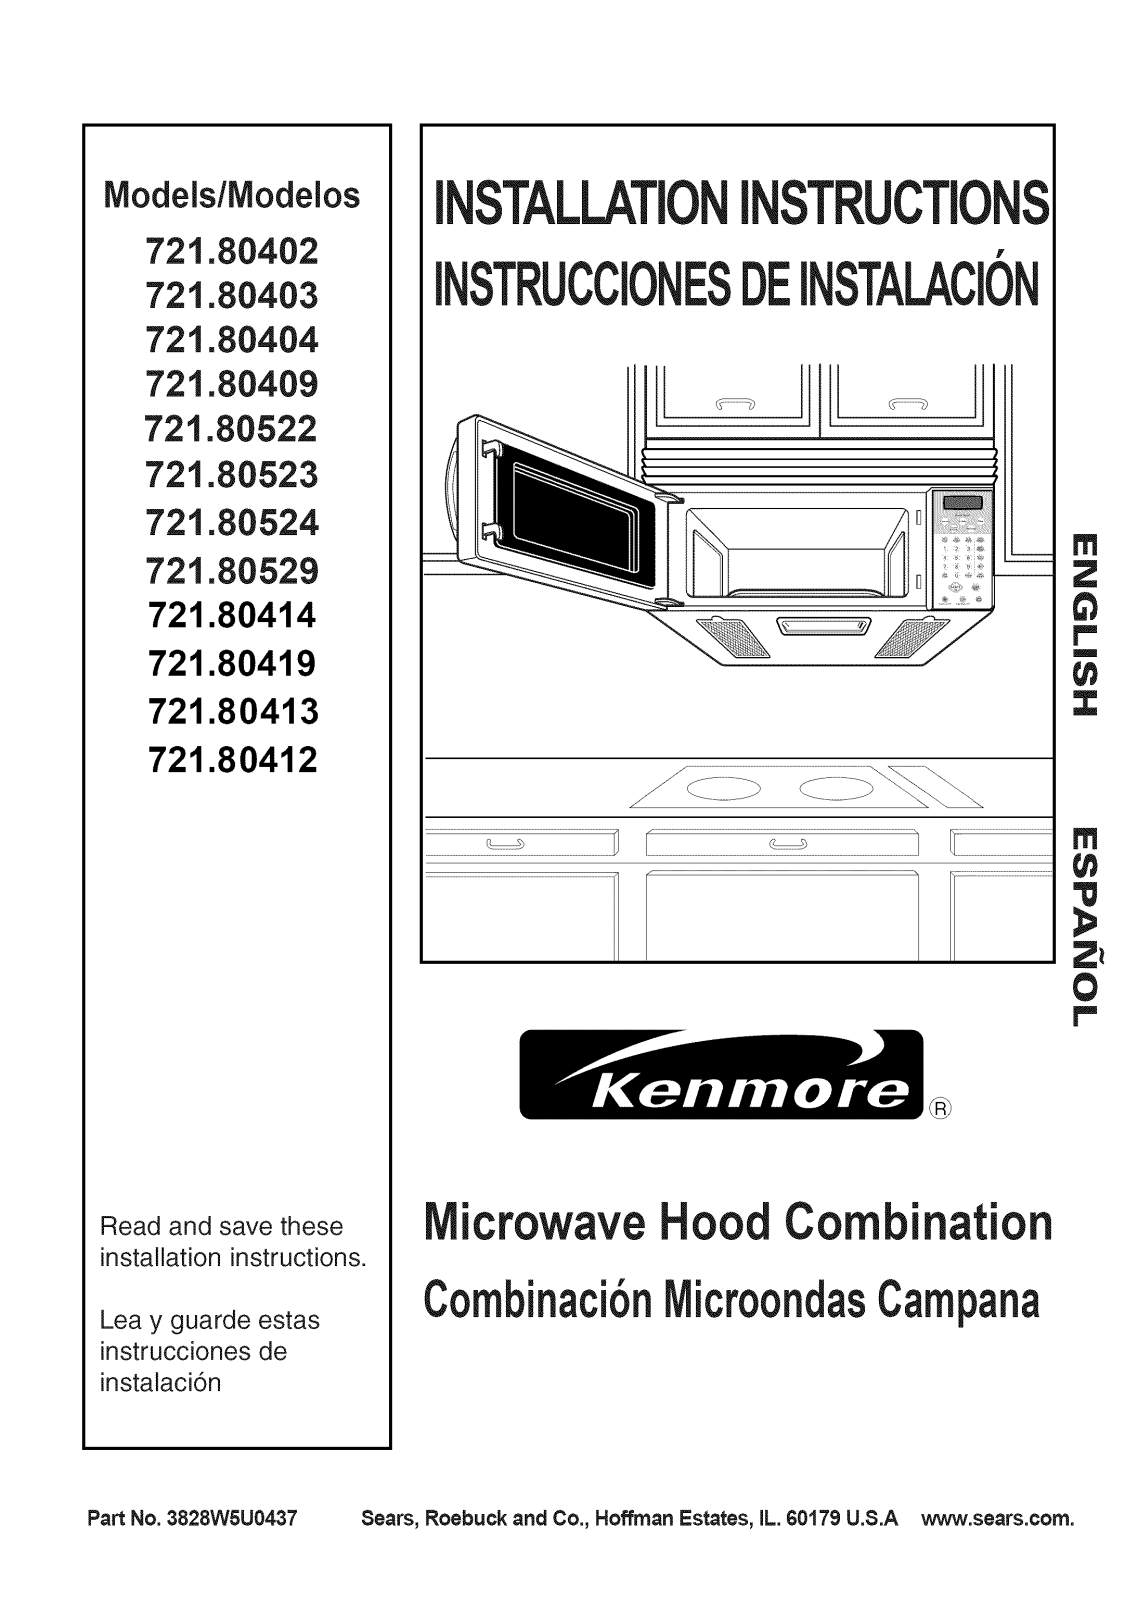 Kenmore 72180524500, 72180529500, 72180523500, 72180522500, 72180419500 Installation Guide